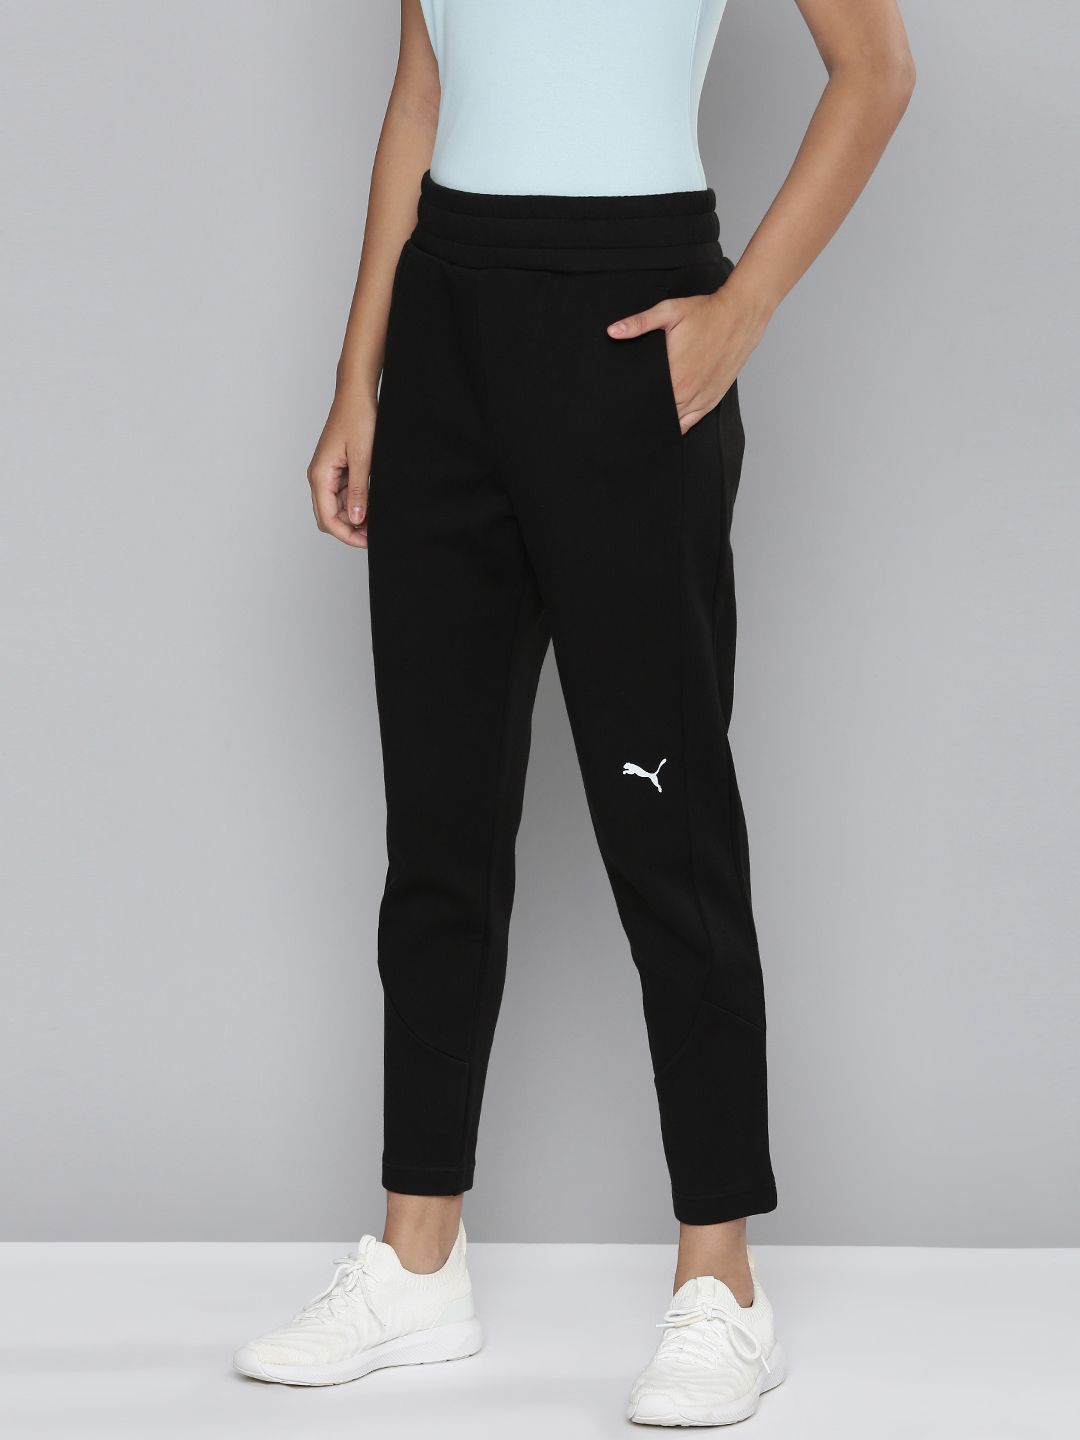 Puma Women Black Brand Logo Printed Evostripe dryCELL High-Waist Track Pants Price in India